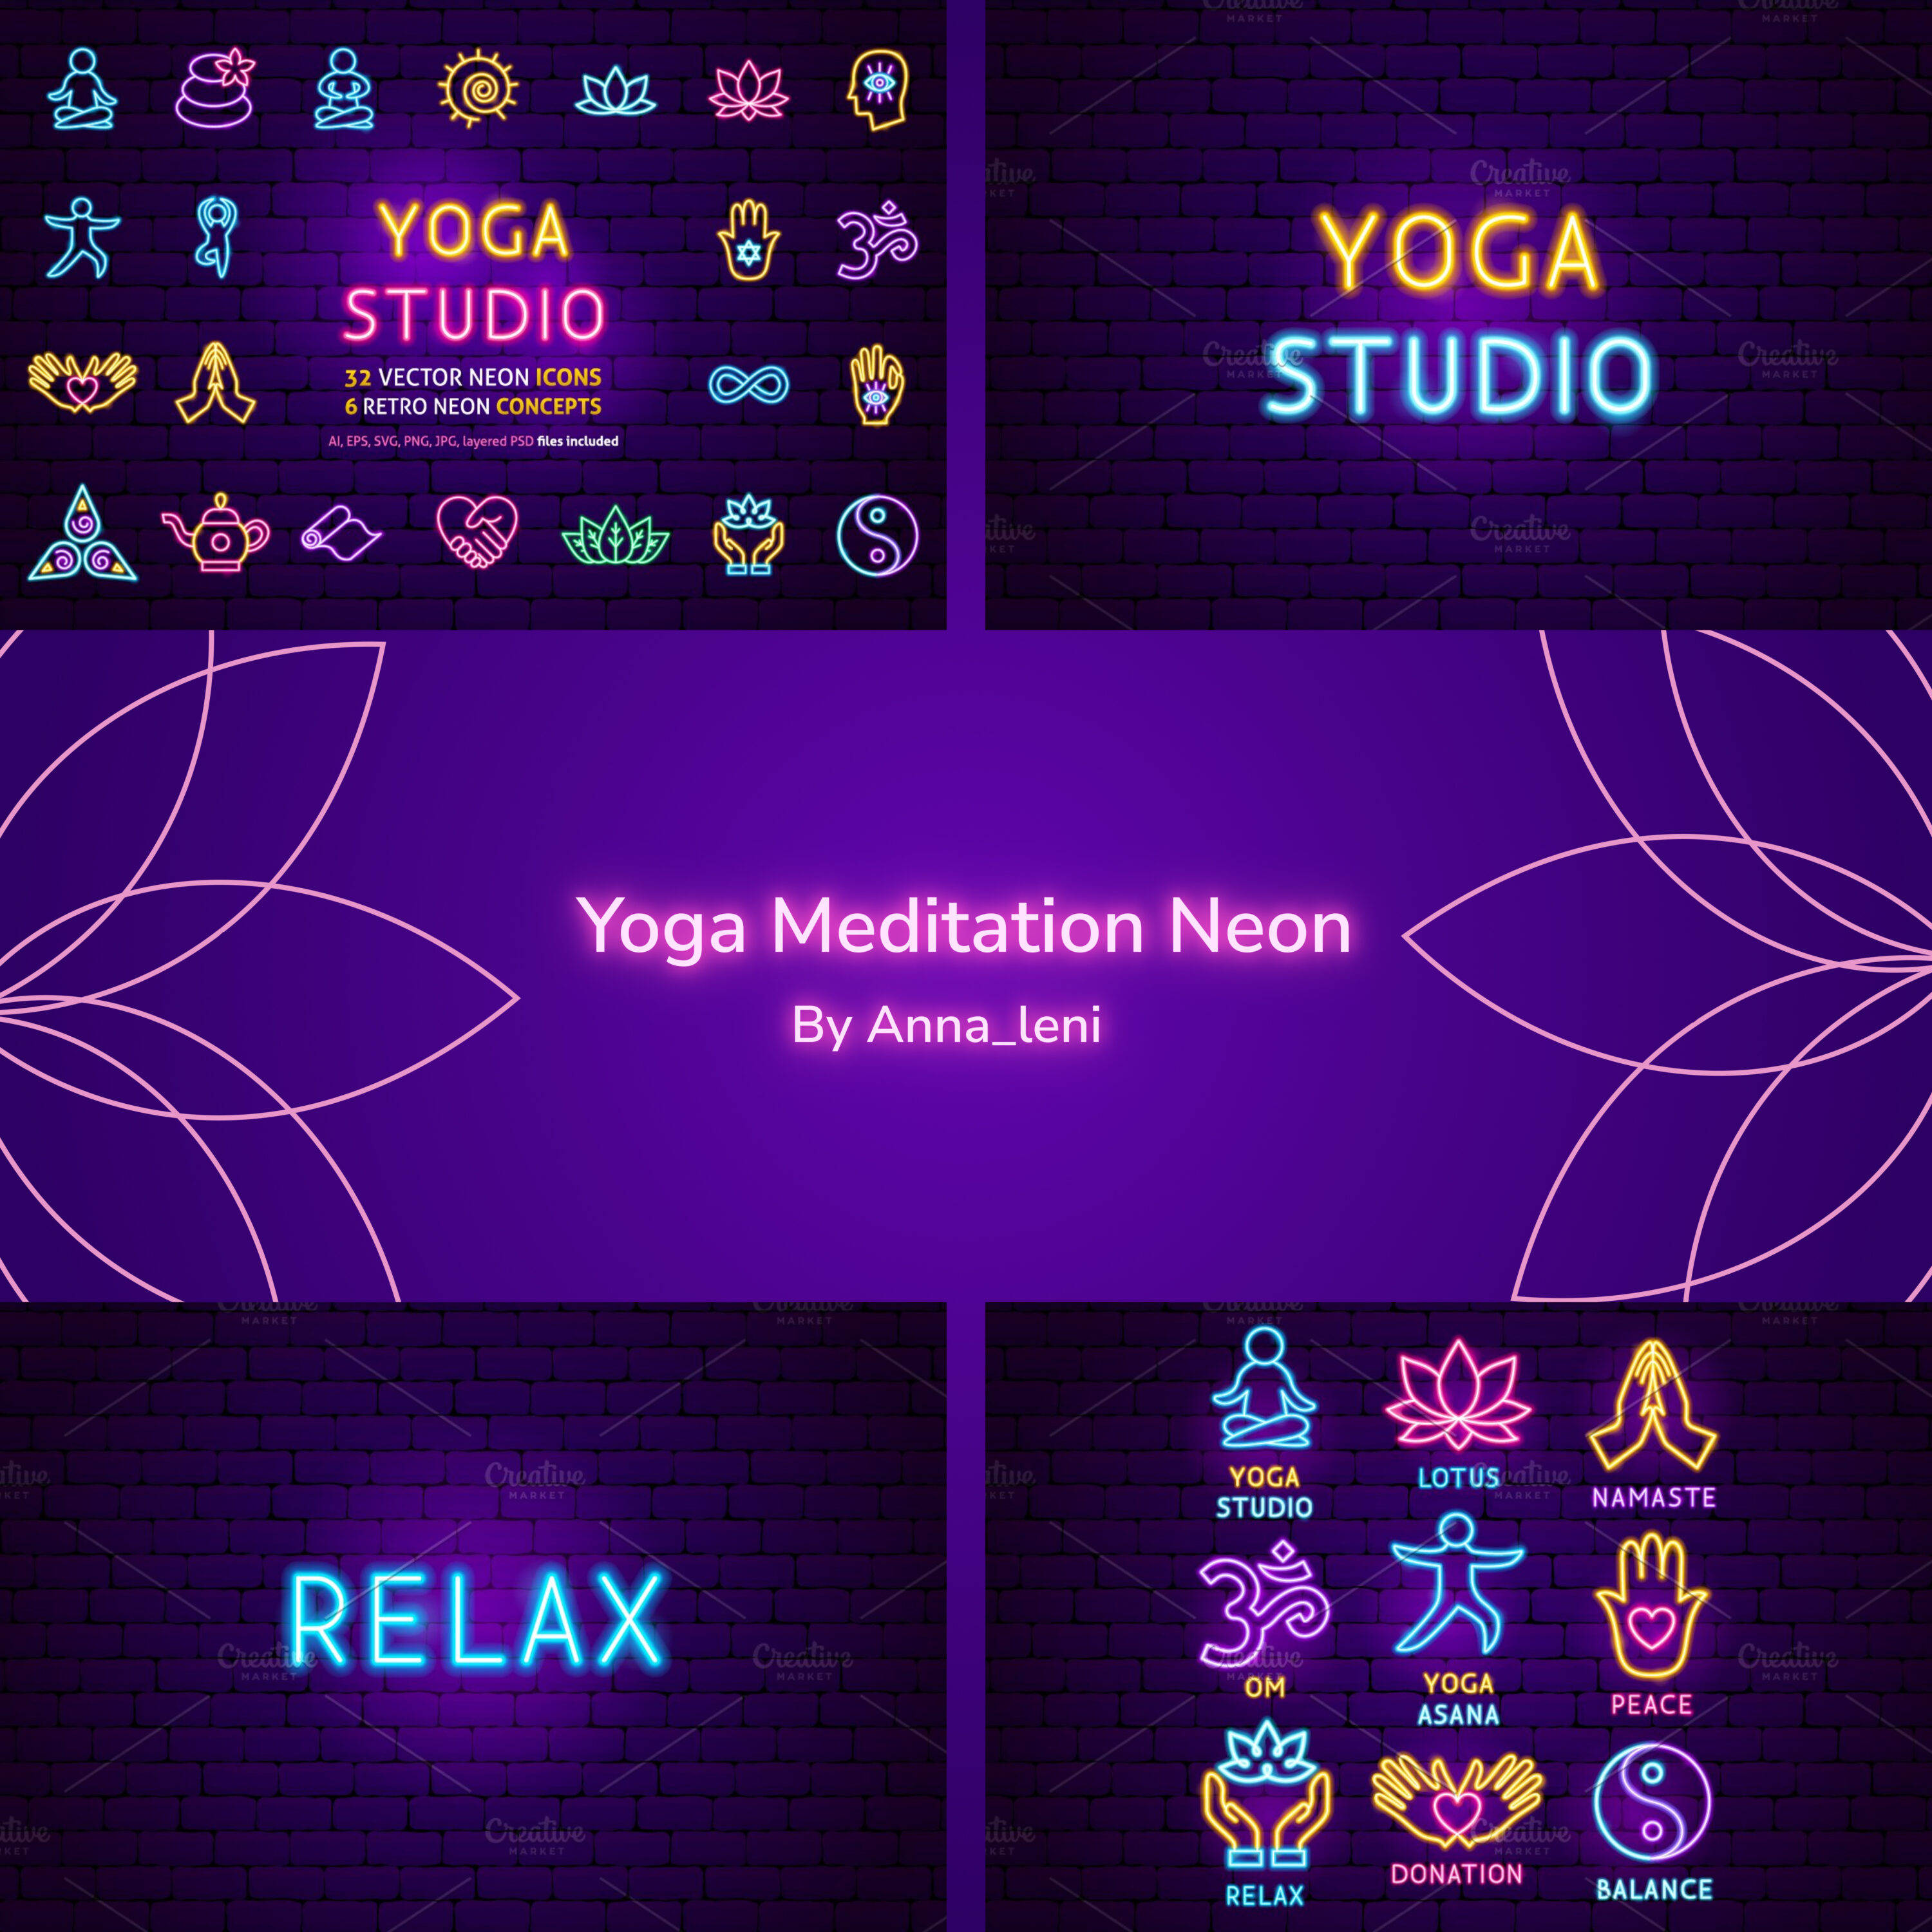 Prints of yoga meditation neon yoga meditation neon yoga meditation neon yoga meditation neon.